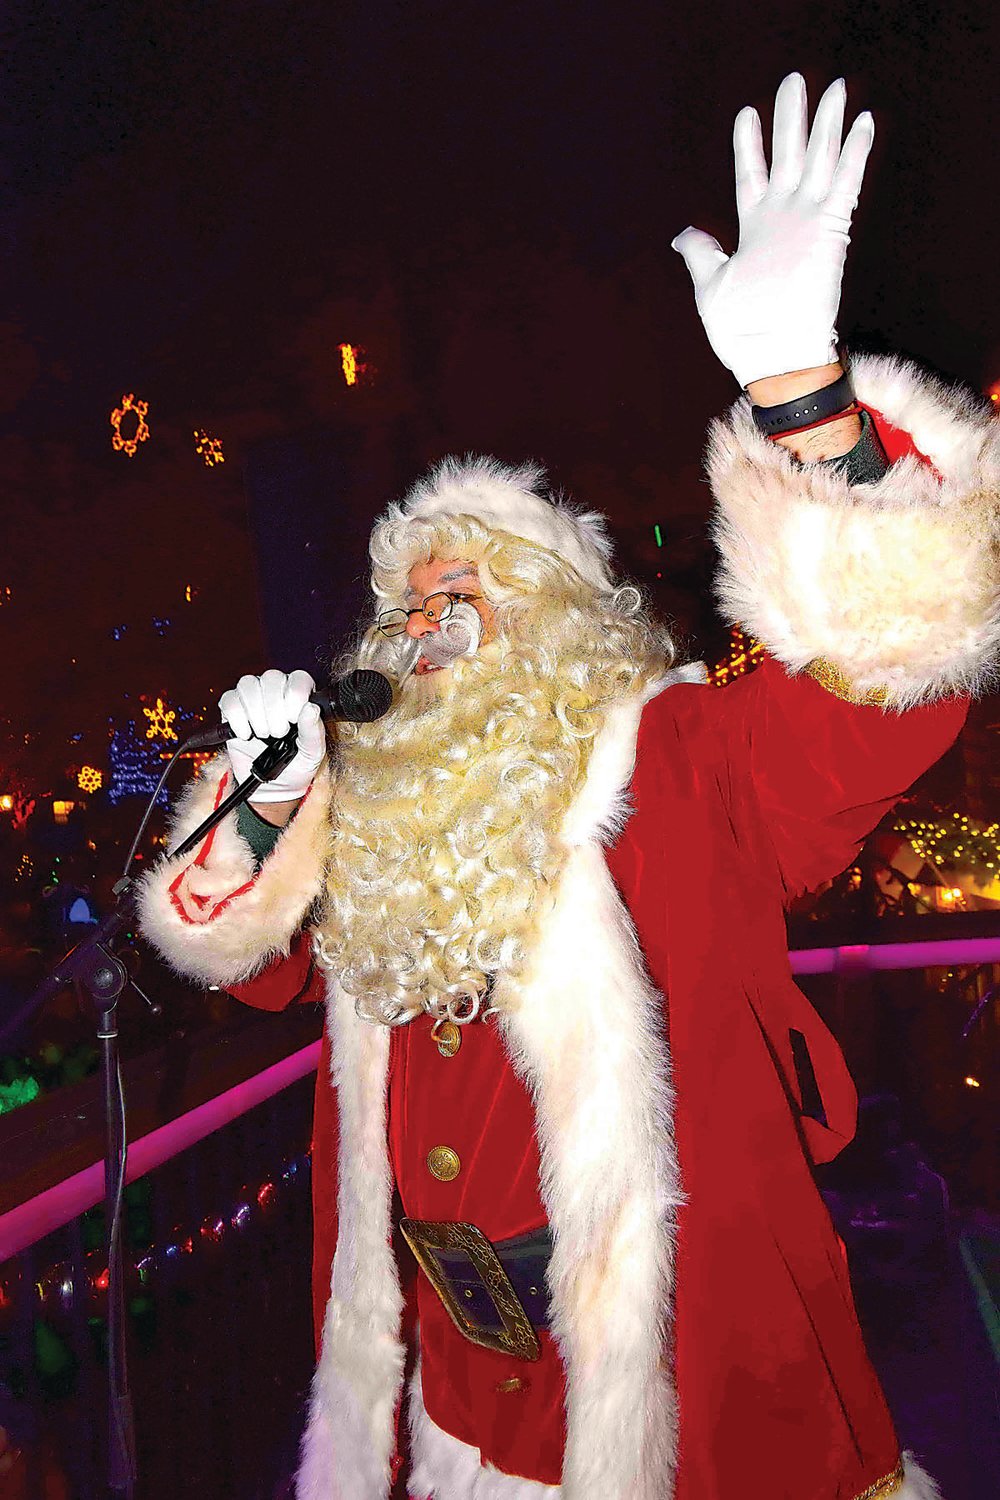 Santa addresses the crowd.